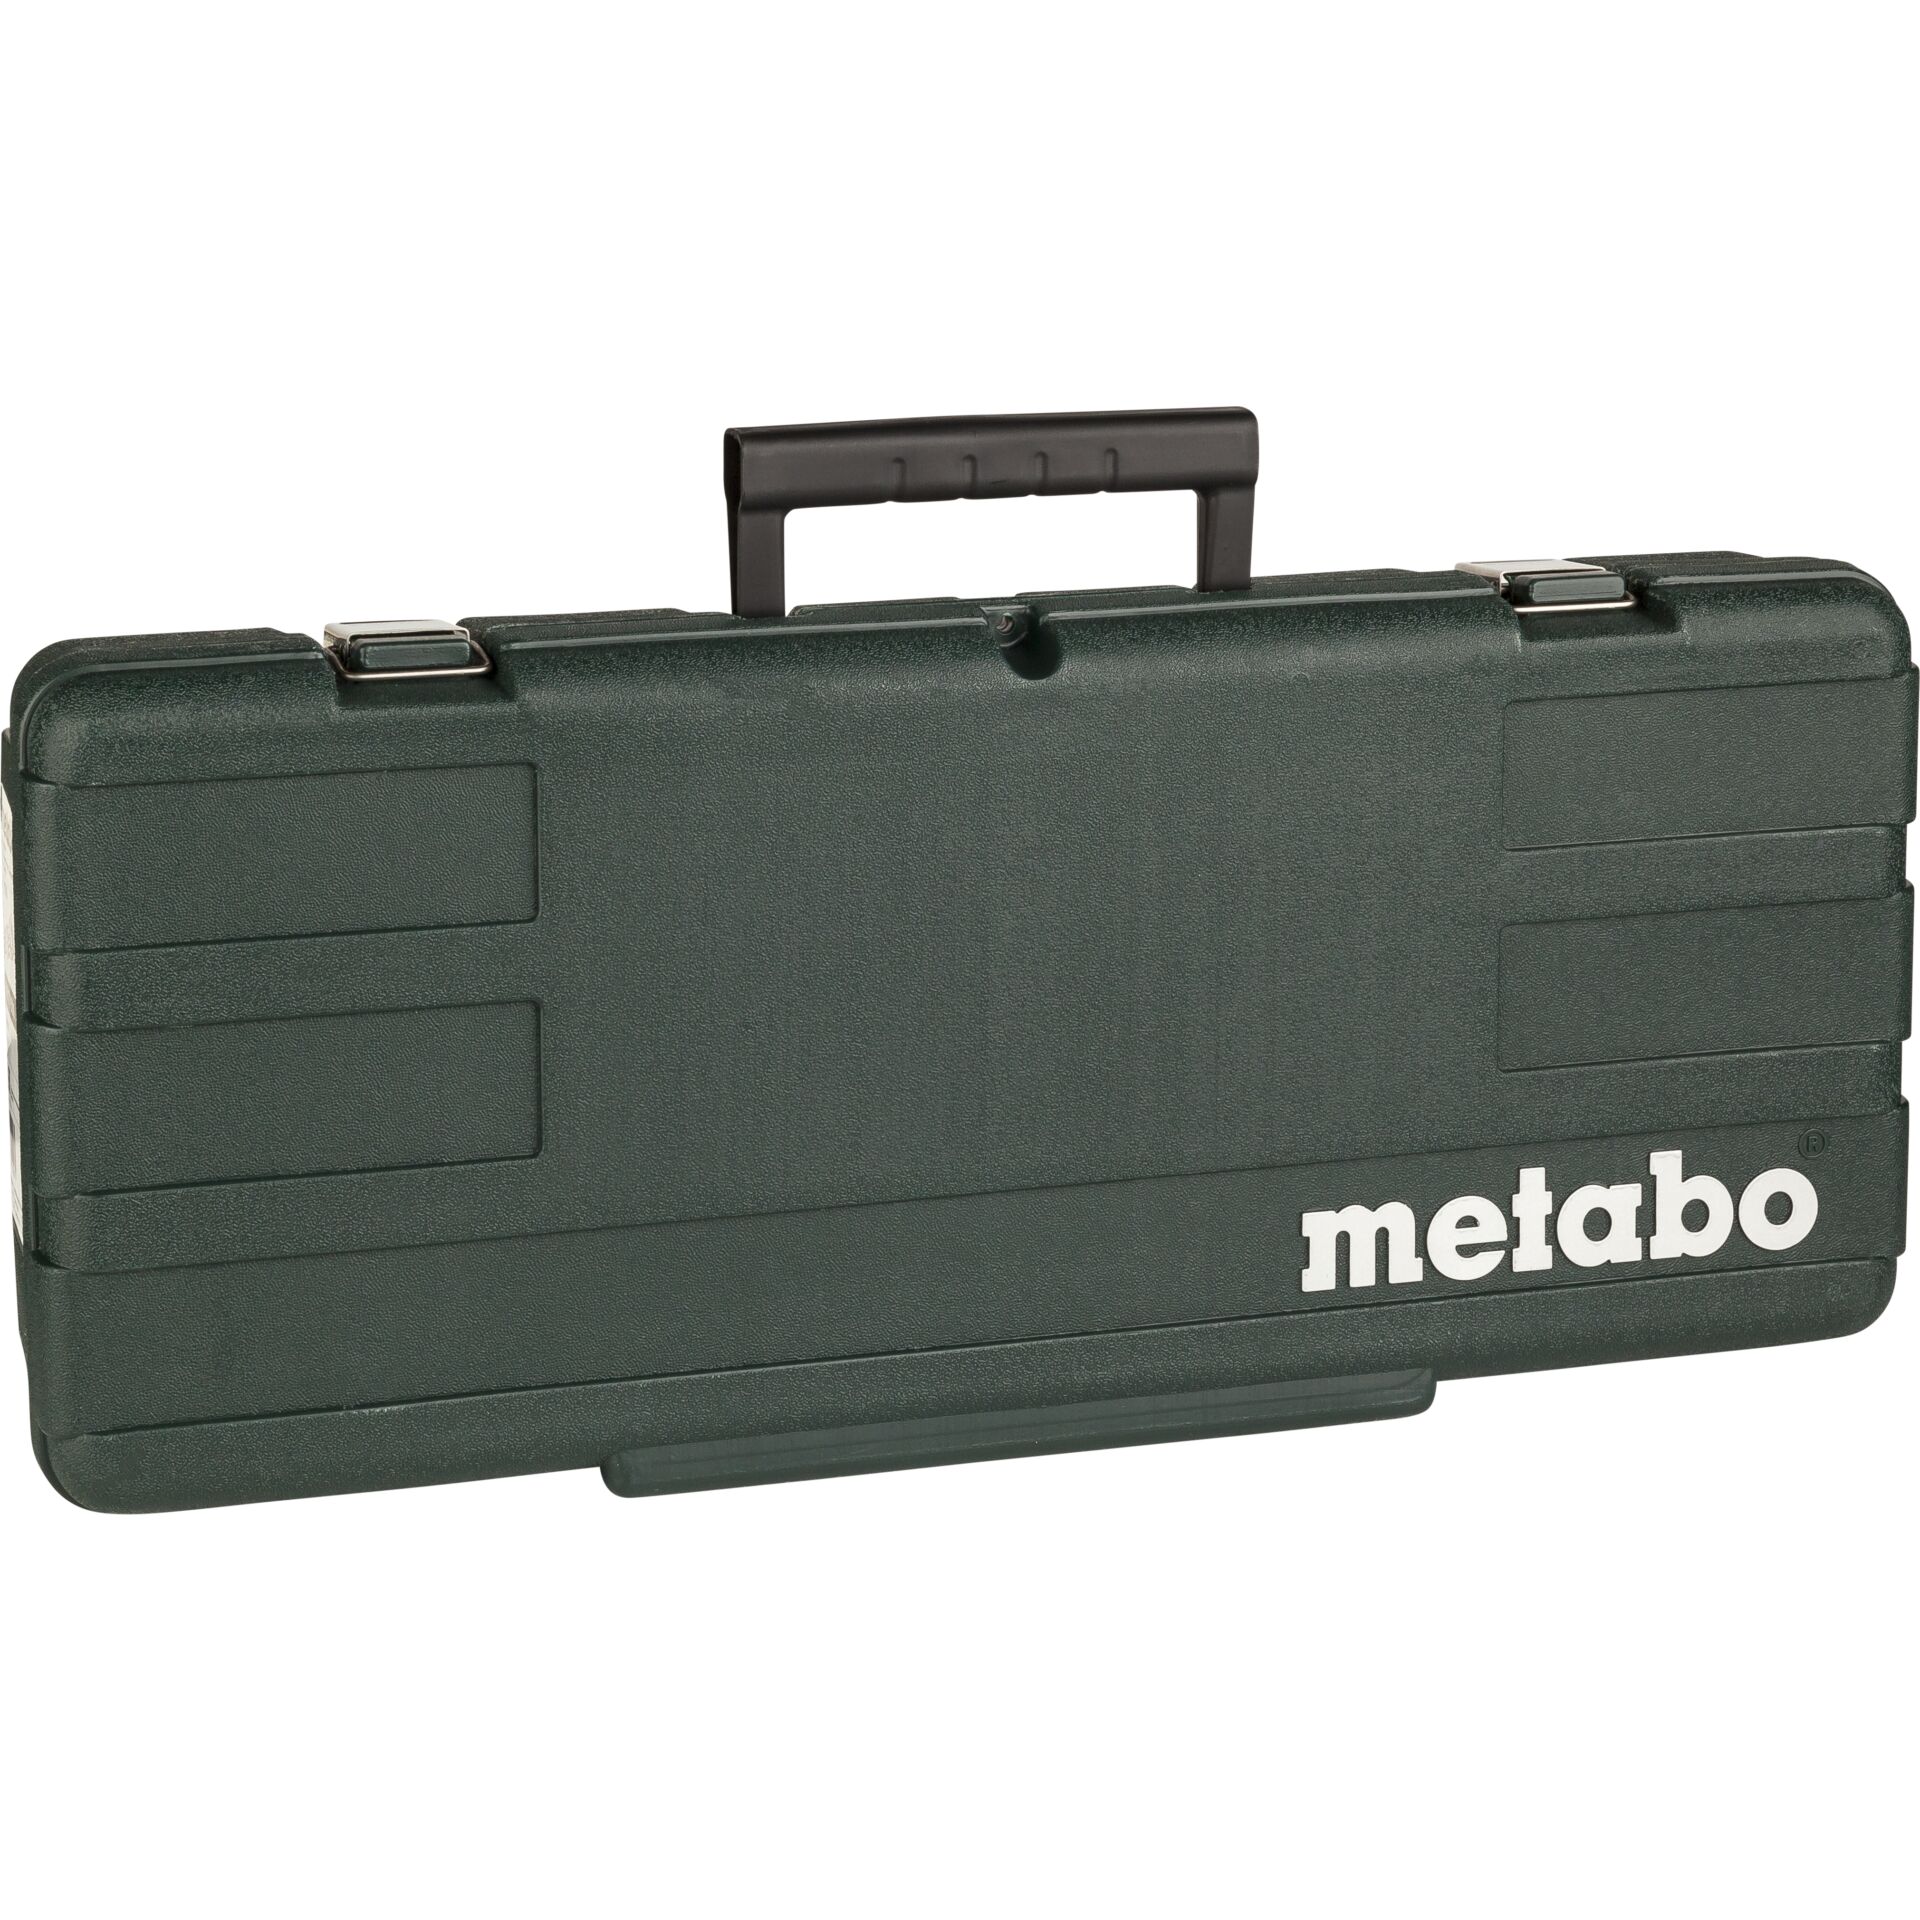 28 Hub-Länge 1100 Hardware/Electronic Metabo -Metabo (606177500) Säbelsäge W 1100 -SSE mm